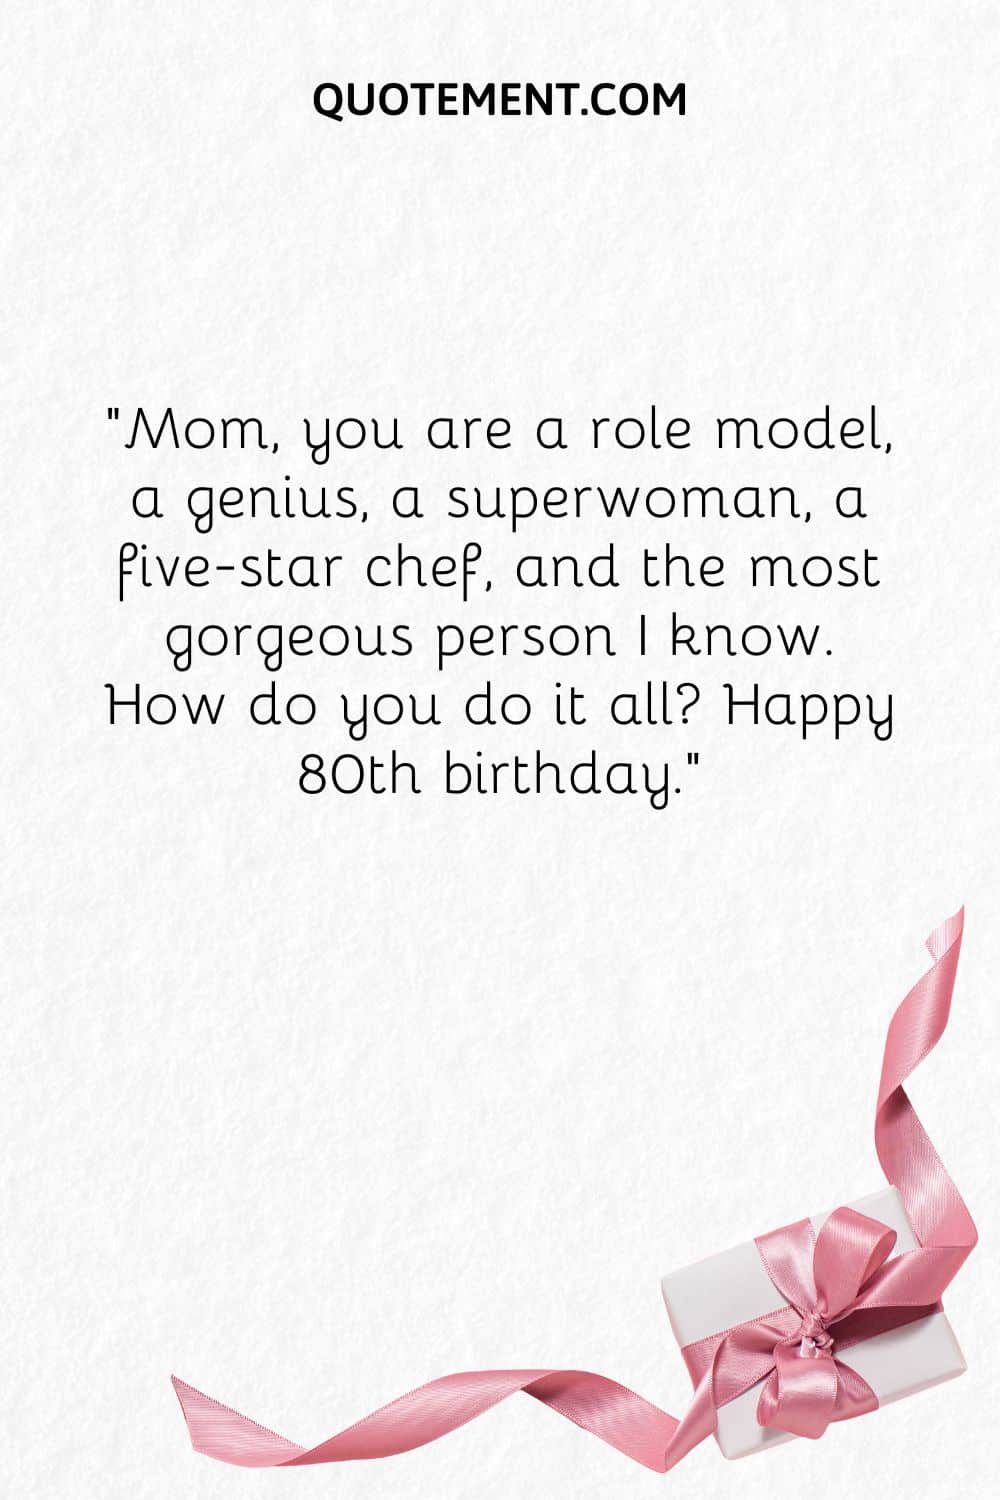 Mom, you are a role model, a genius, a superwoman, a five-star chef,